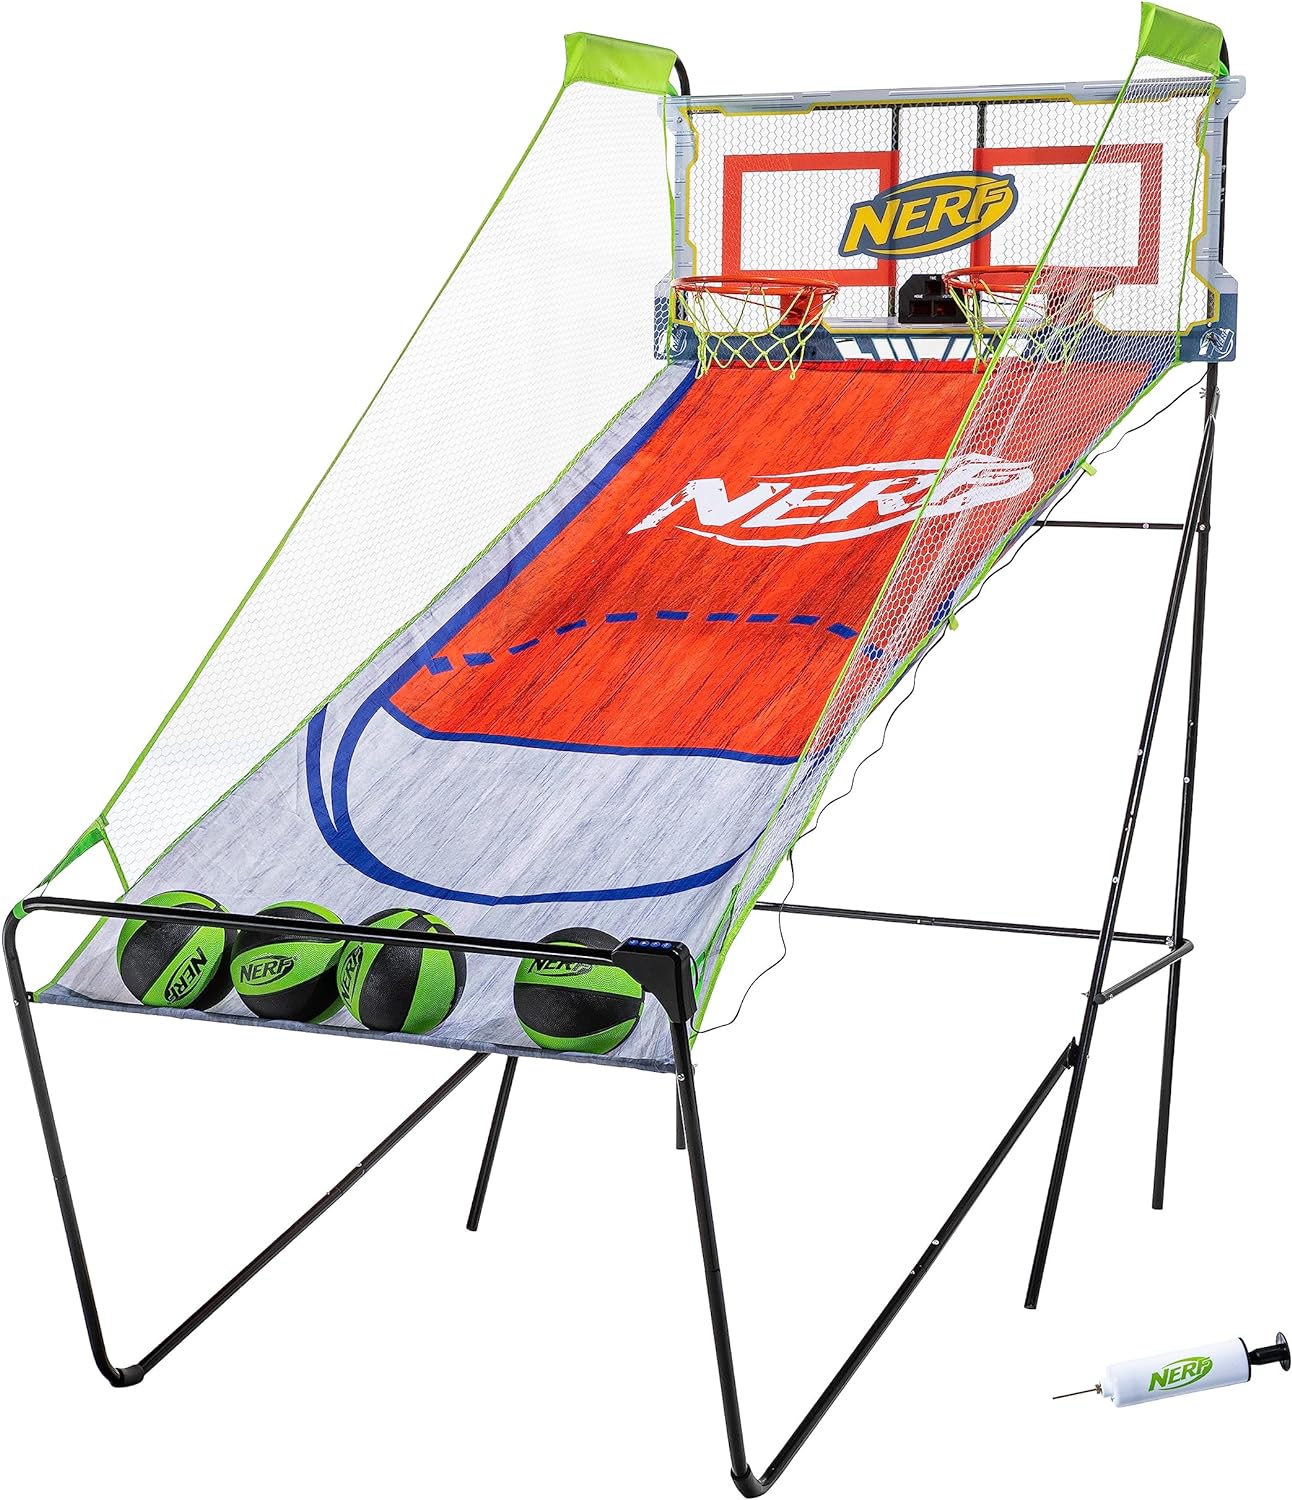 NERF Basketball Arcade Shootout - Proshot Indoor Electronic Double Basketball Hoop Game - Dual Court Basketball Shooting with Electronic Scoreboard   (4) Basketballs - 2 Player Shooting Game Multi